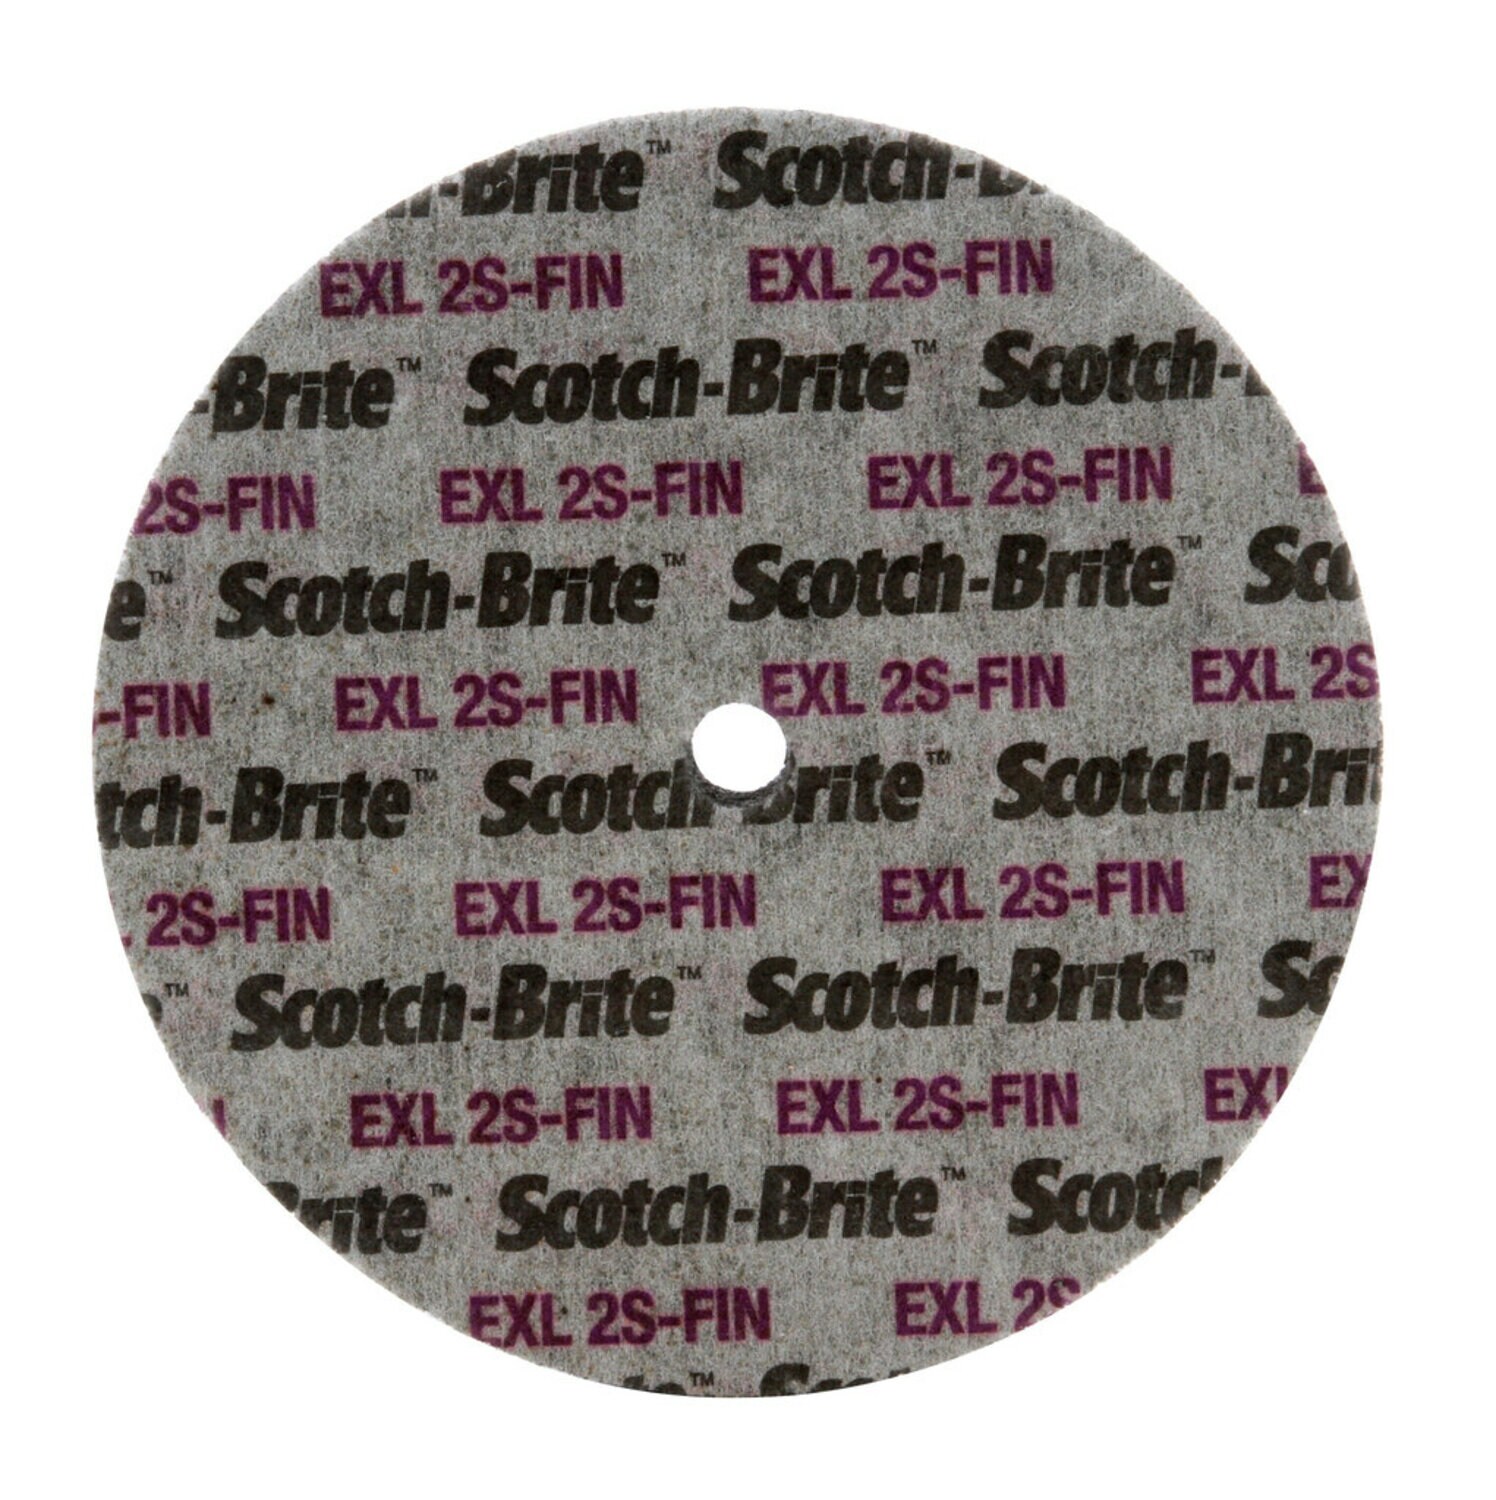 7100043083 - Scotch-Brite EXL Unitized Wheel, XL-UW, 2S Fine, 6 in x 1/4 in x 1/4
in, 8 ea/Case